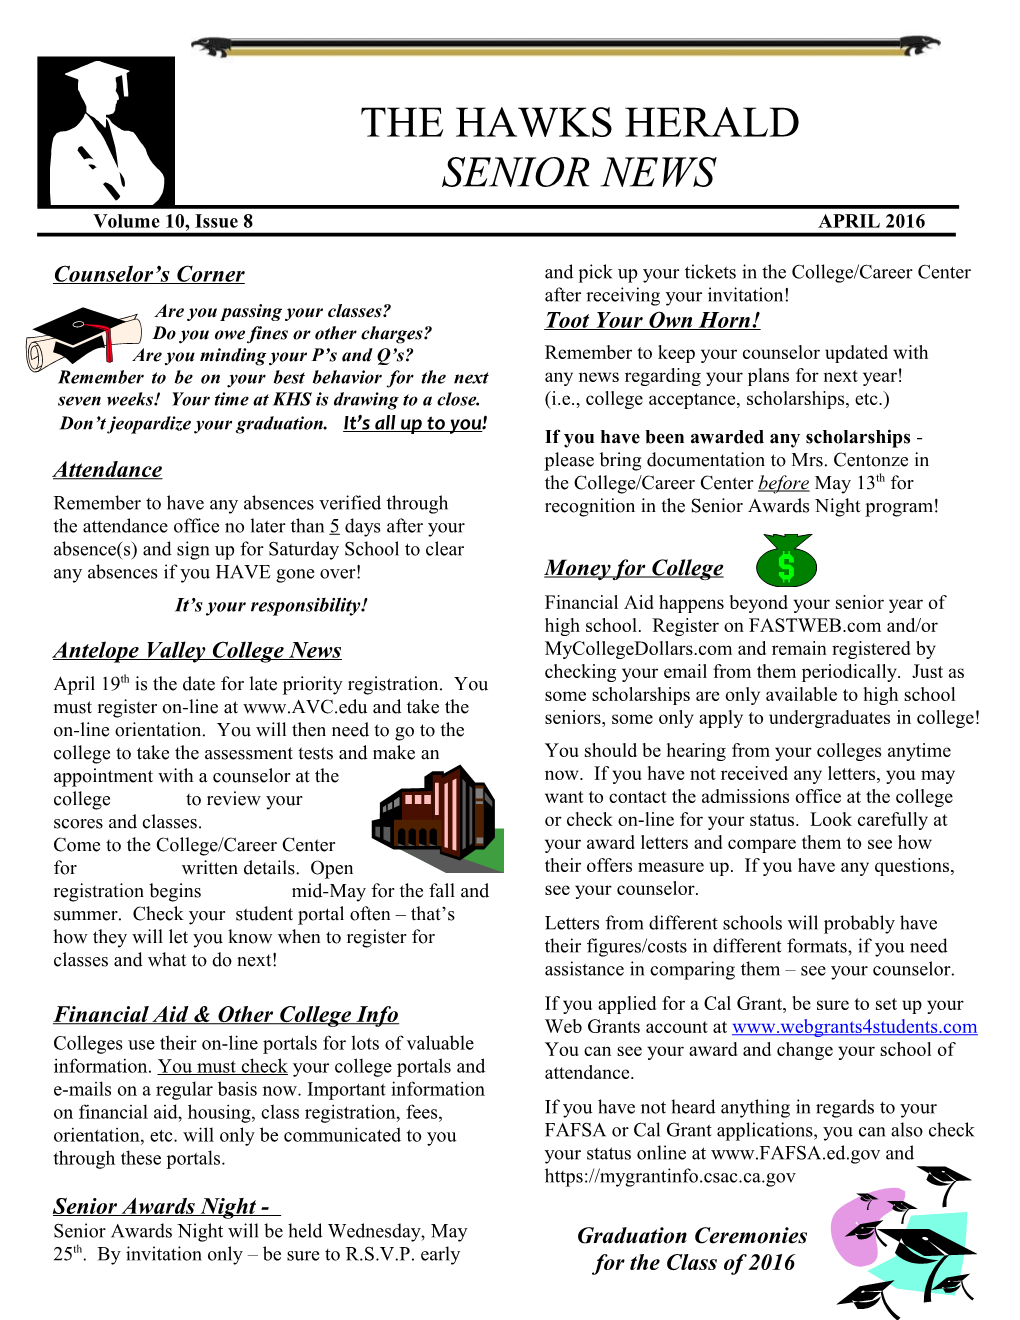 The Hawks Herald Senior News